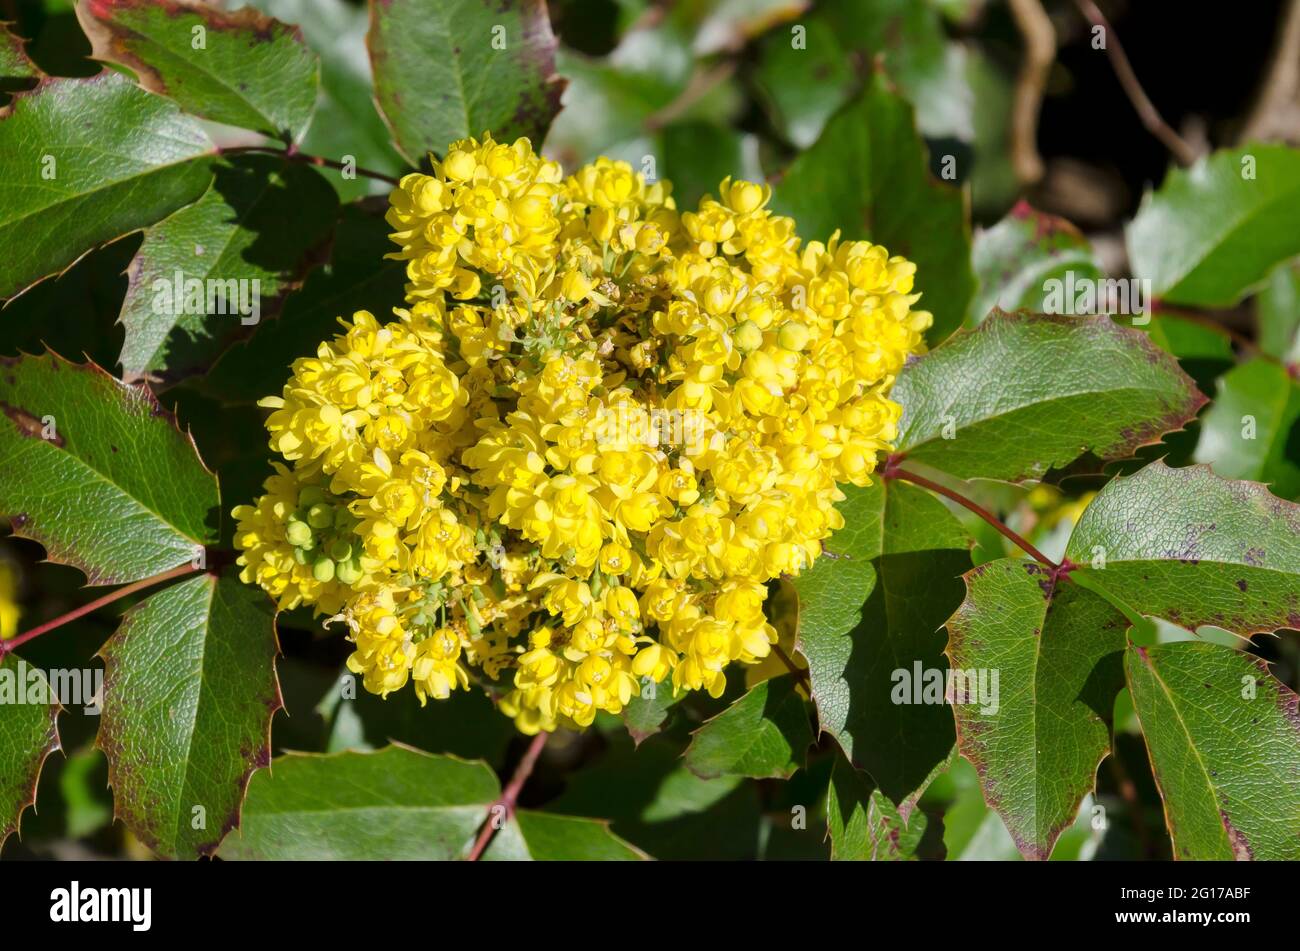 Mahonia aquifolium shrub with yellow flower, evergreen bush with spiny leaves in bloom, Sofia, Bulgaria Stock Photo